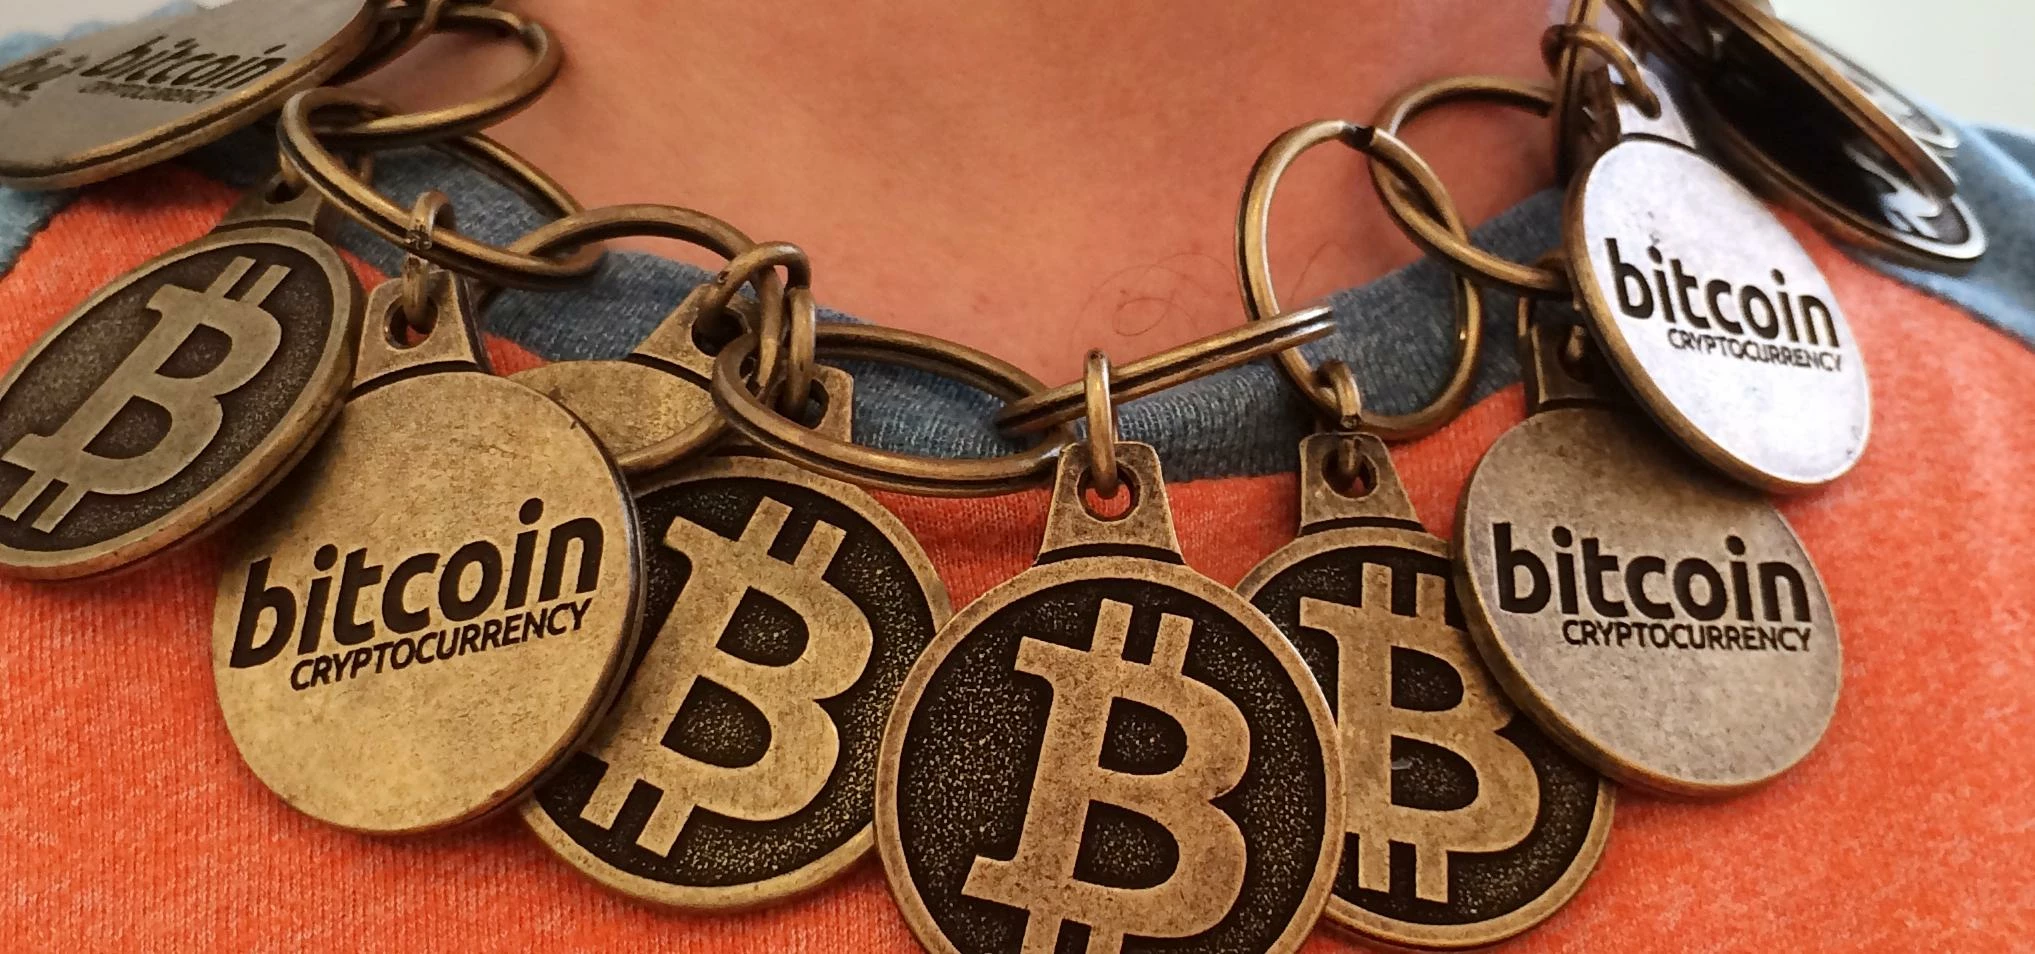 Bitcoin "Blockchain" Necklace